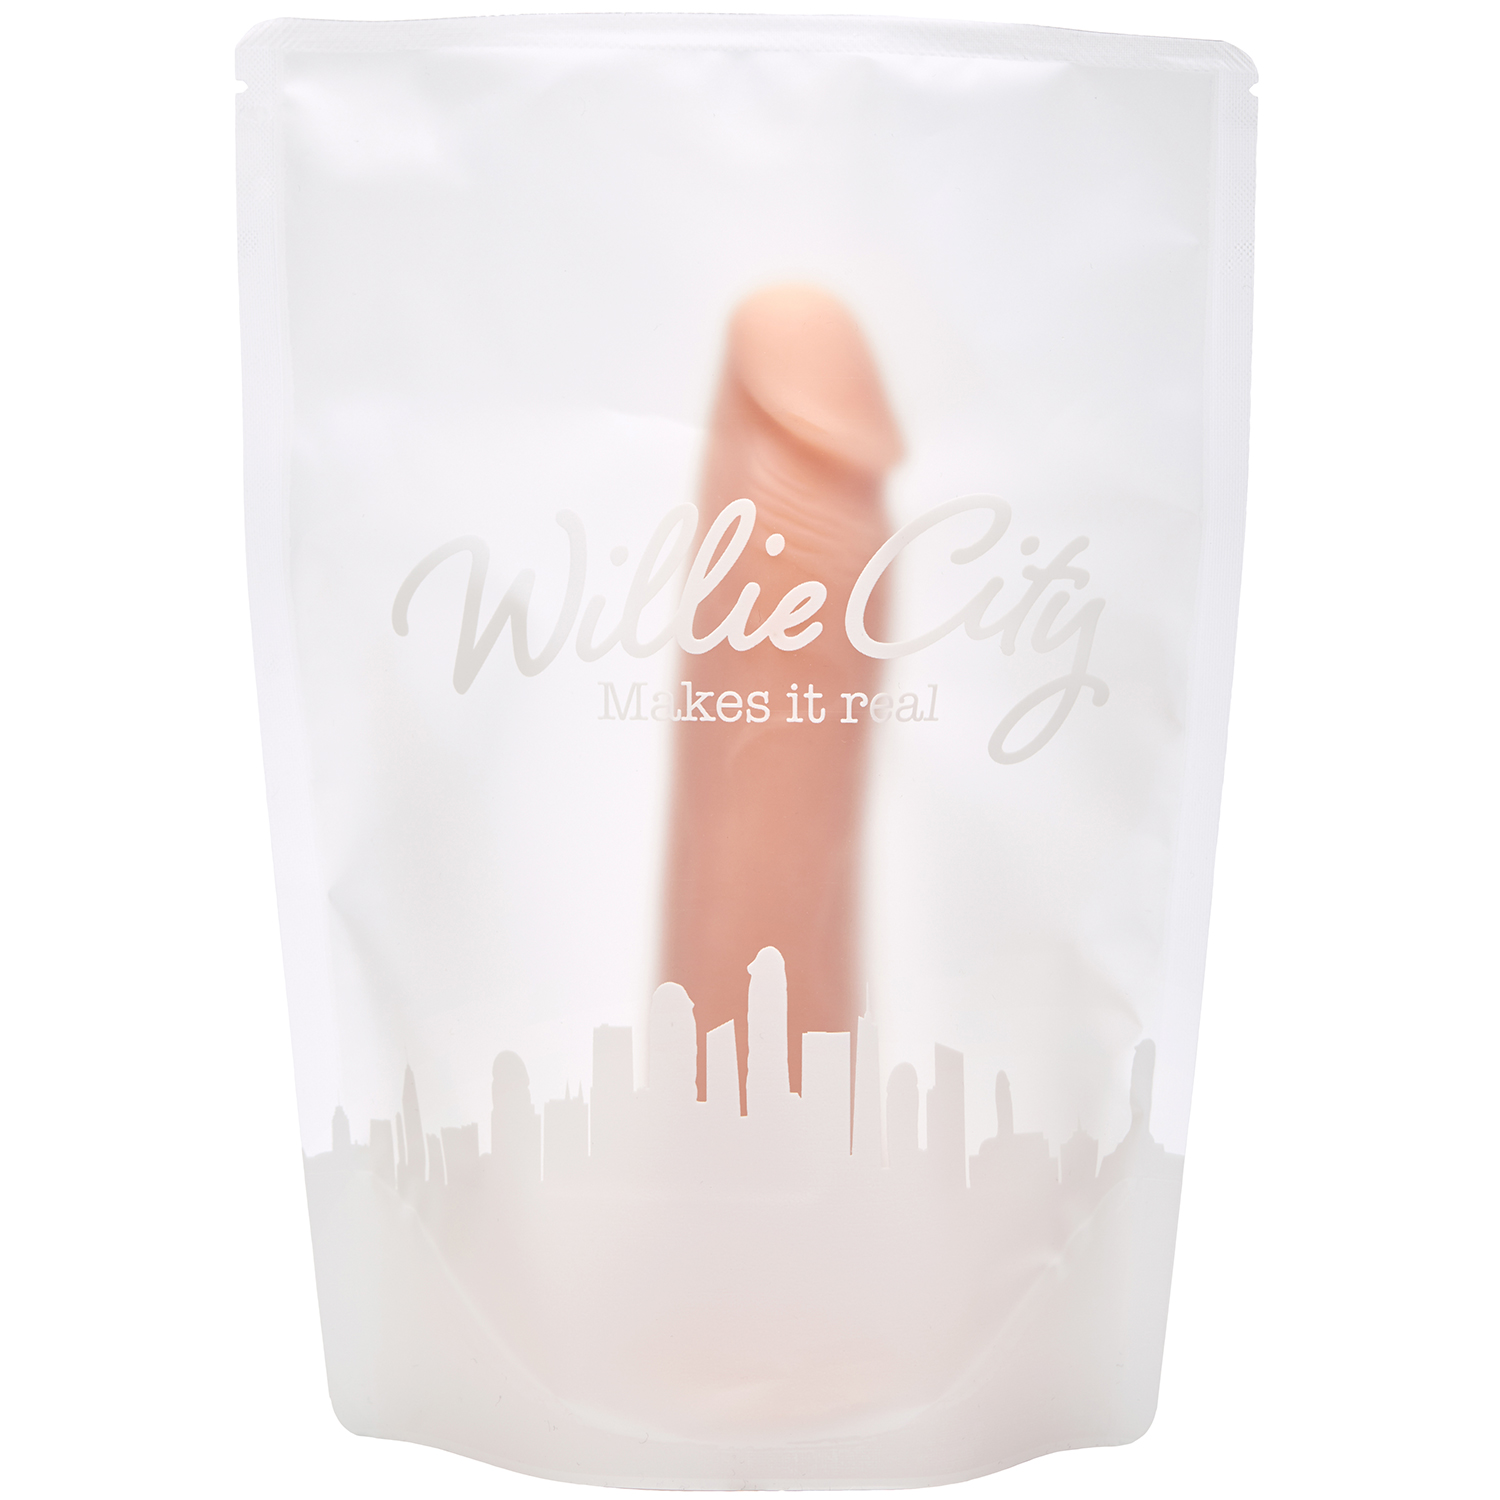 Willie City Luxe Realistisk Silikondildo med Sugpropp 18 cm  - Nude